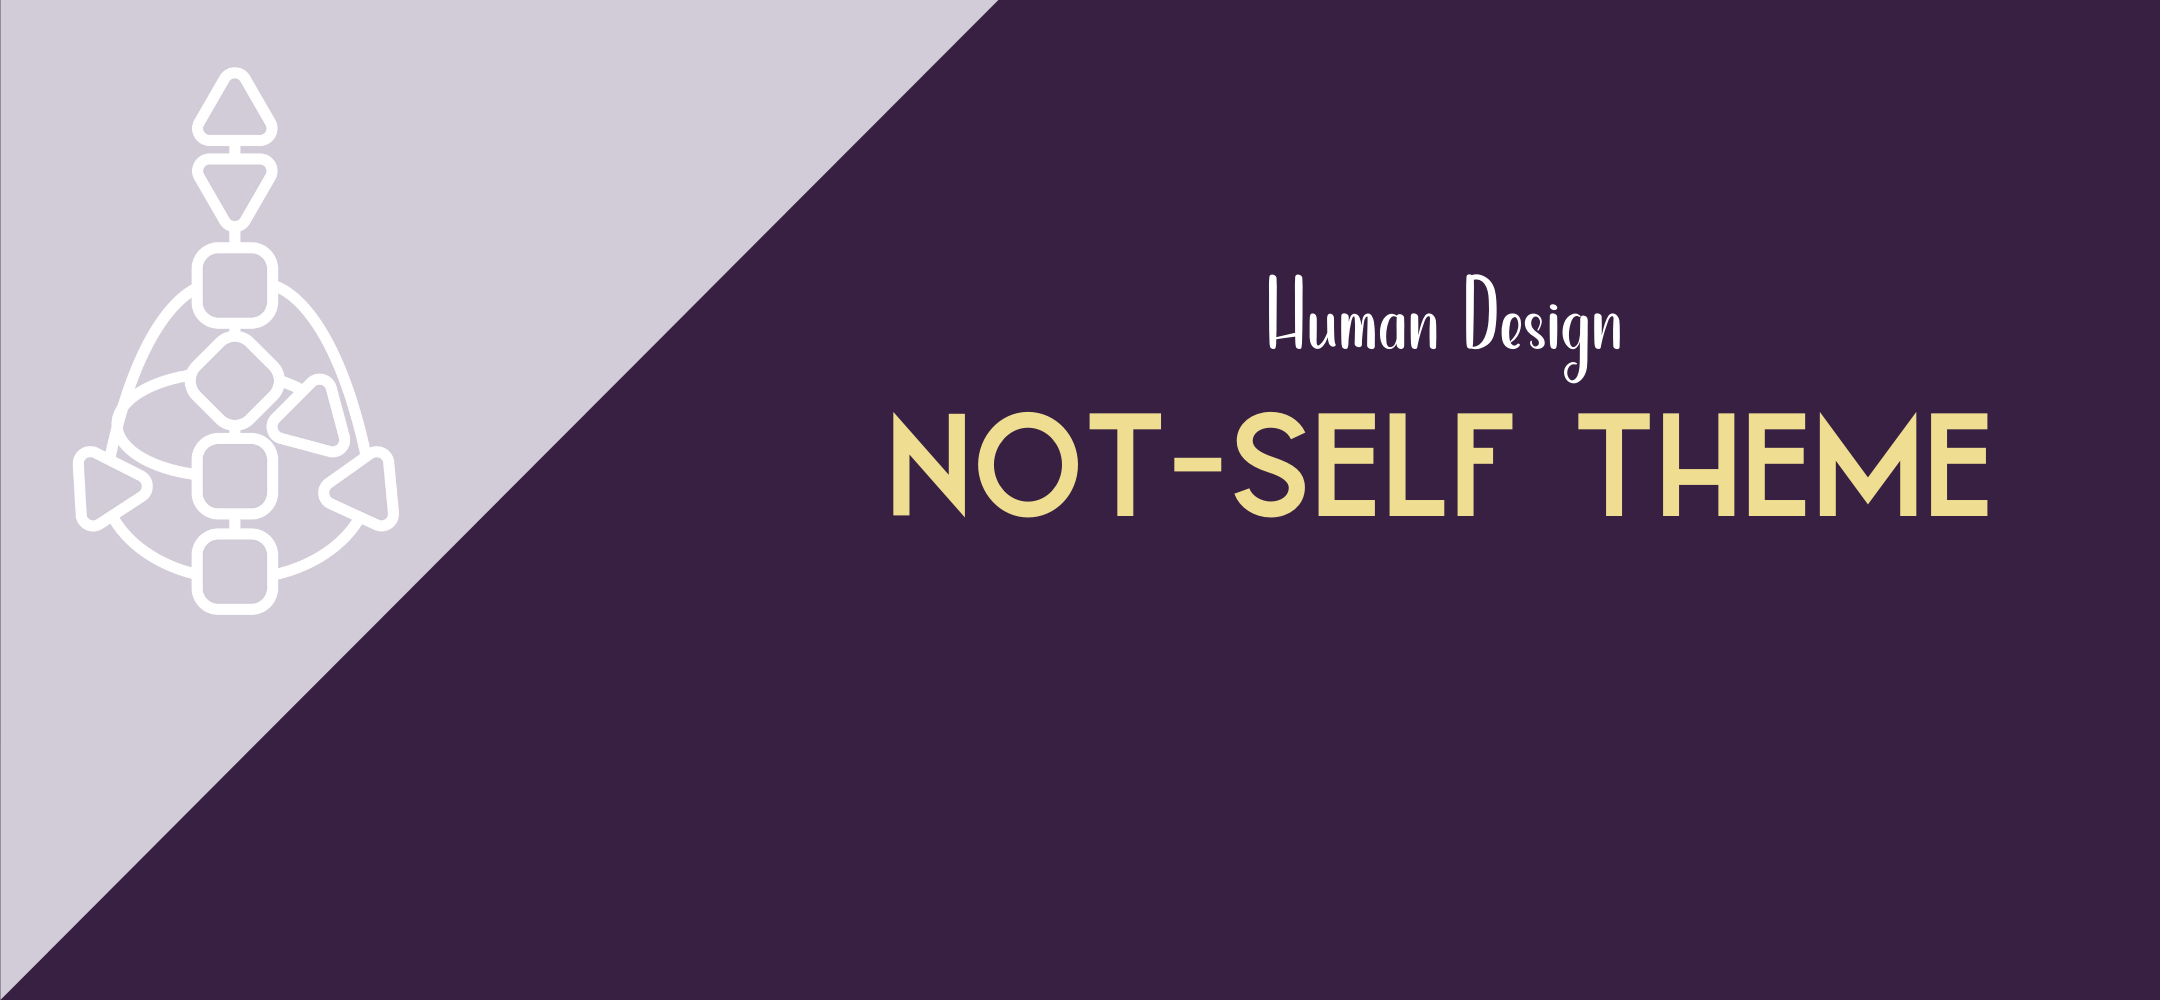 human design not-self theme